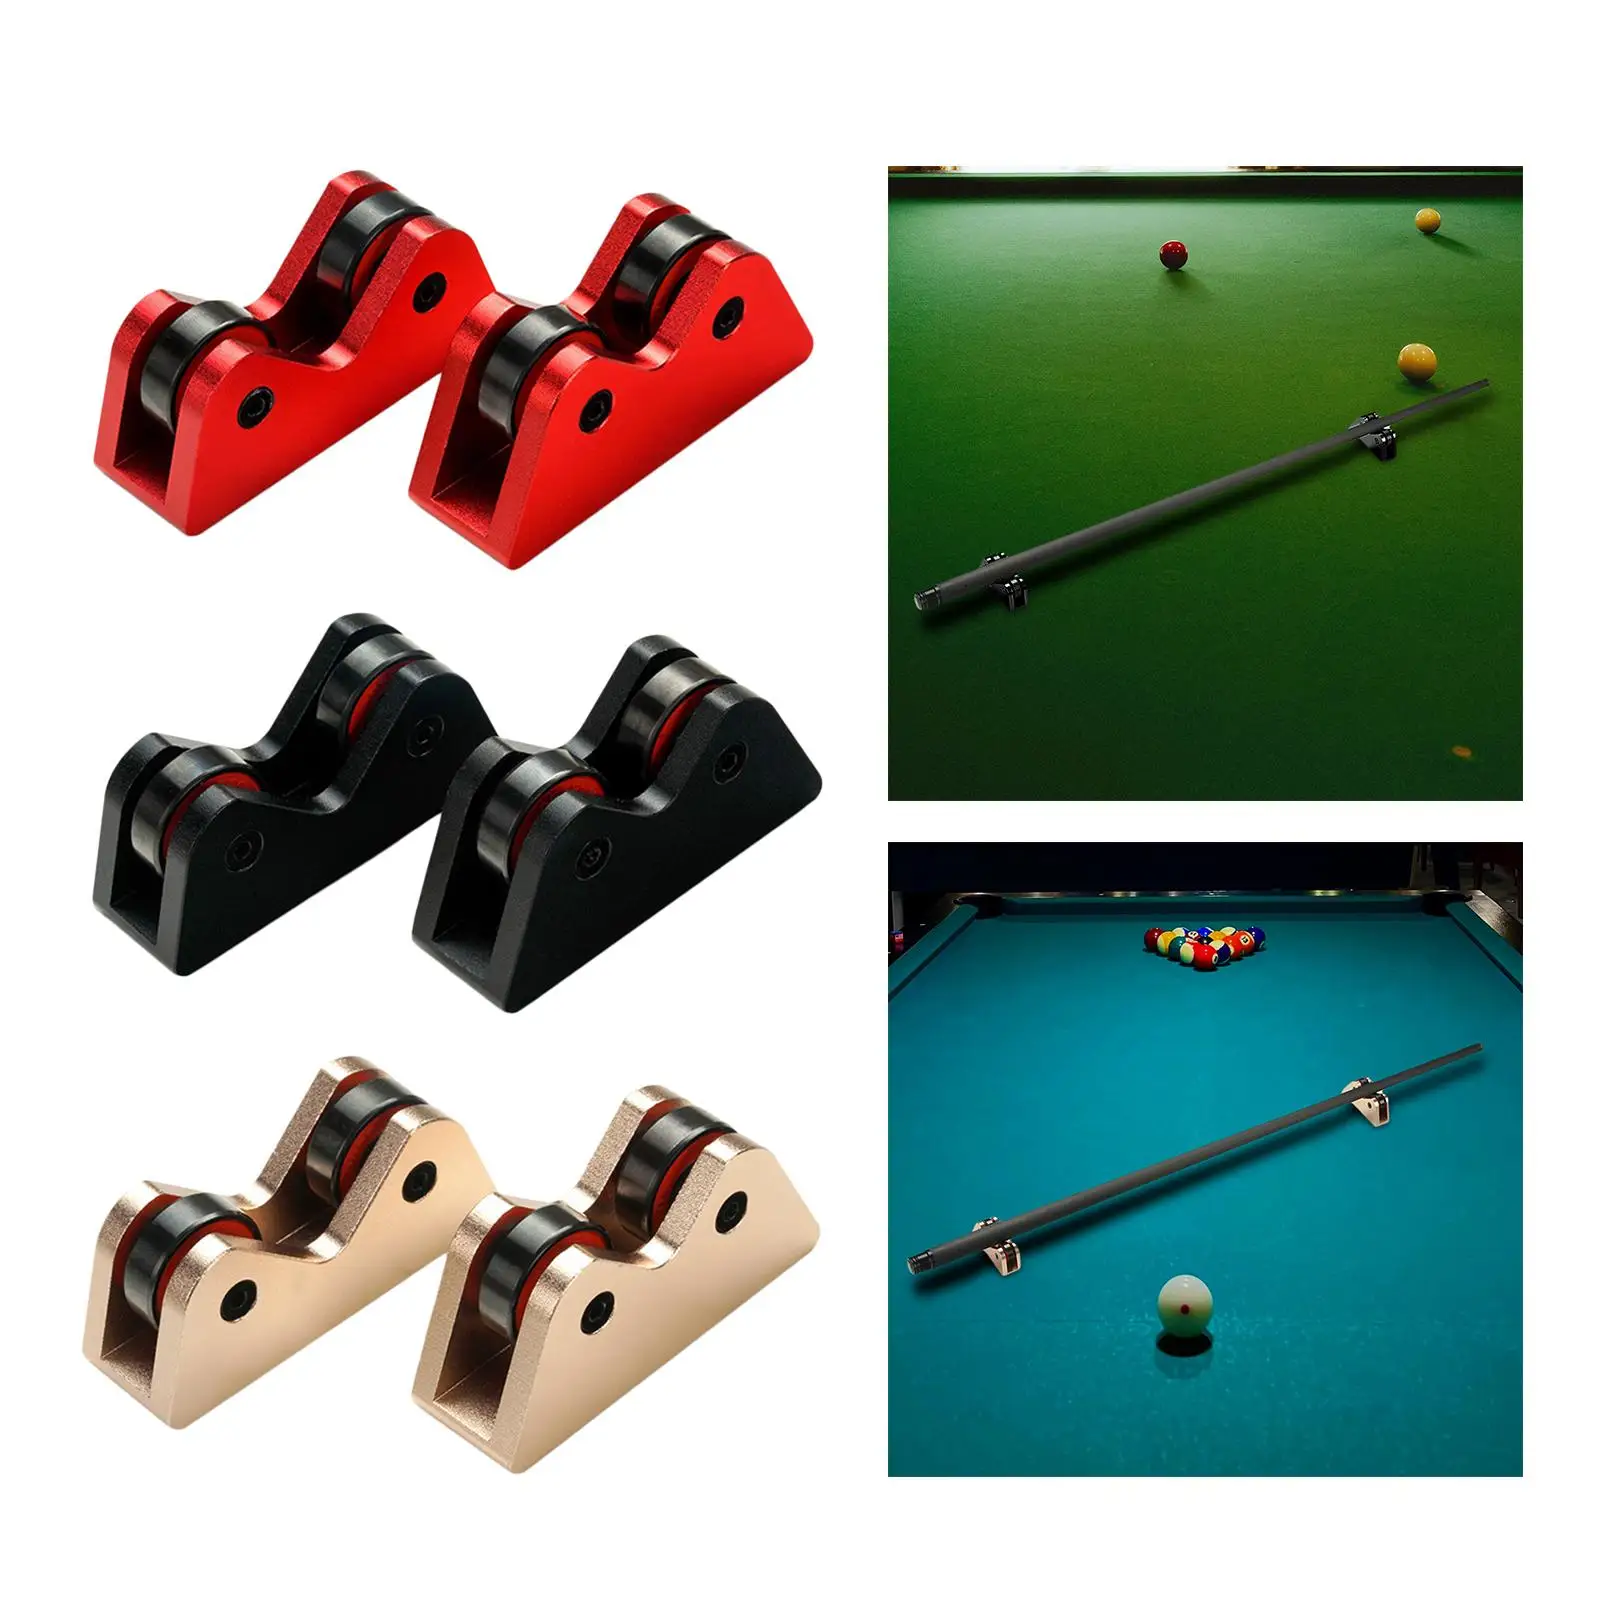 2Pcs Snooker Club Roller Straightness Detector Detection Tool Billiard Cue Straightness Checker Portable for Club Parts Maintain